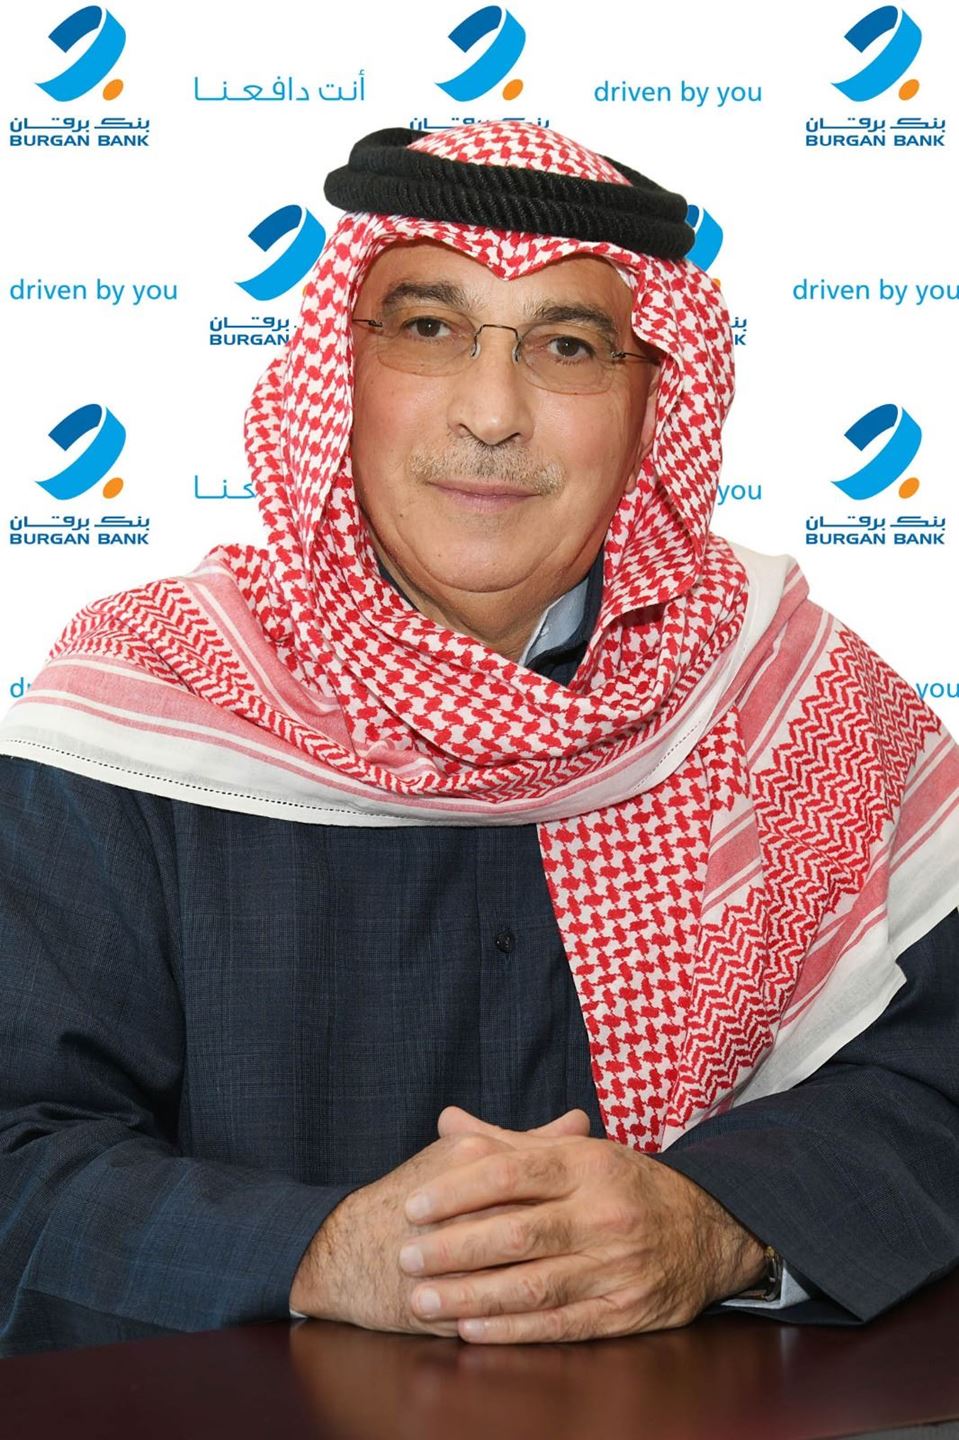 Mr. Masoud M.J. Hayat, Vice Chairman and Group CEO of Burgan Bank Group